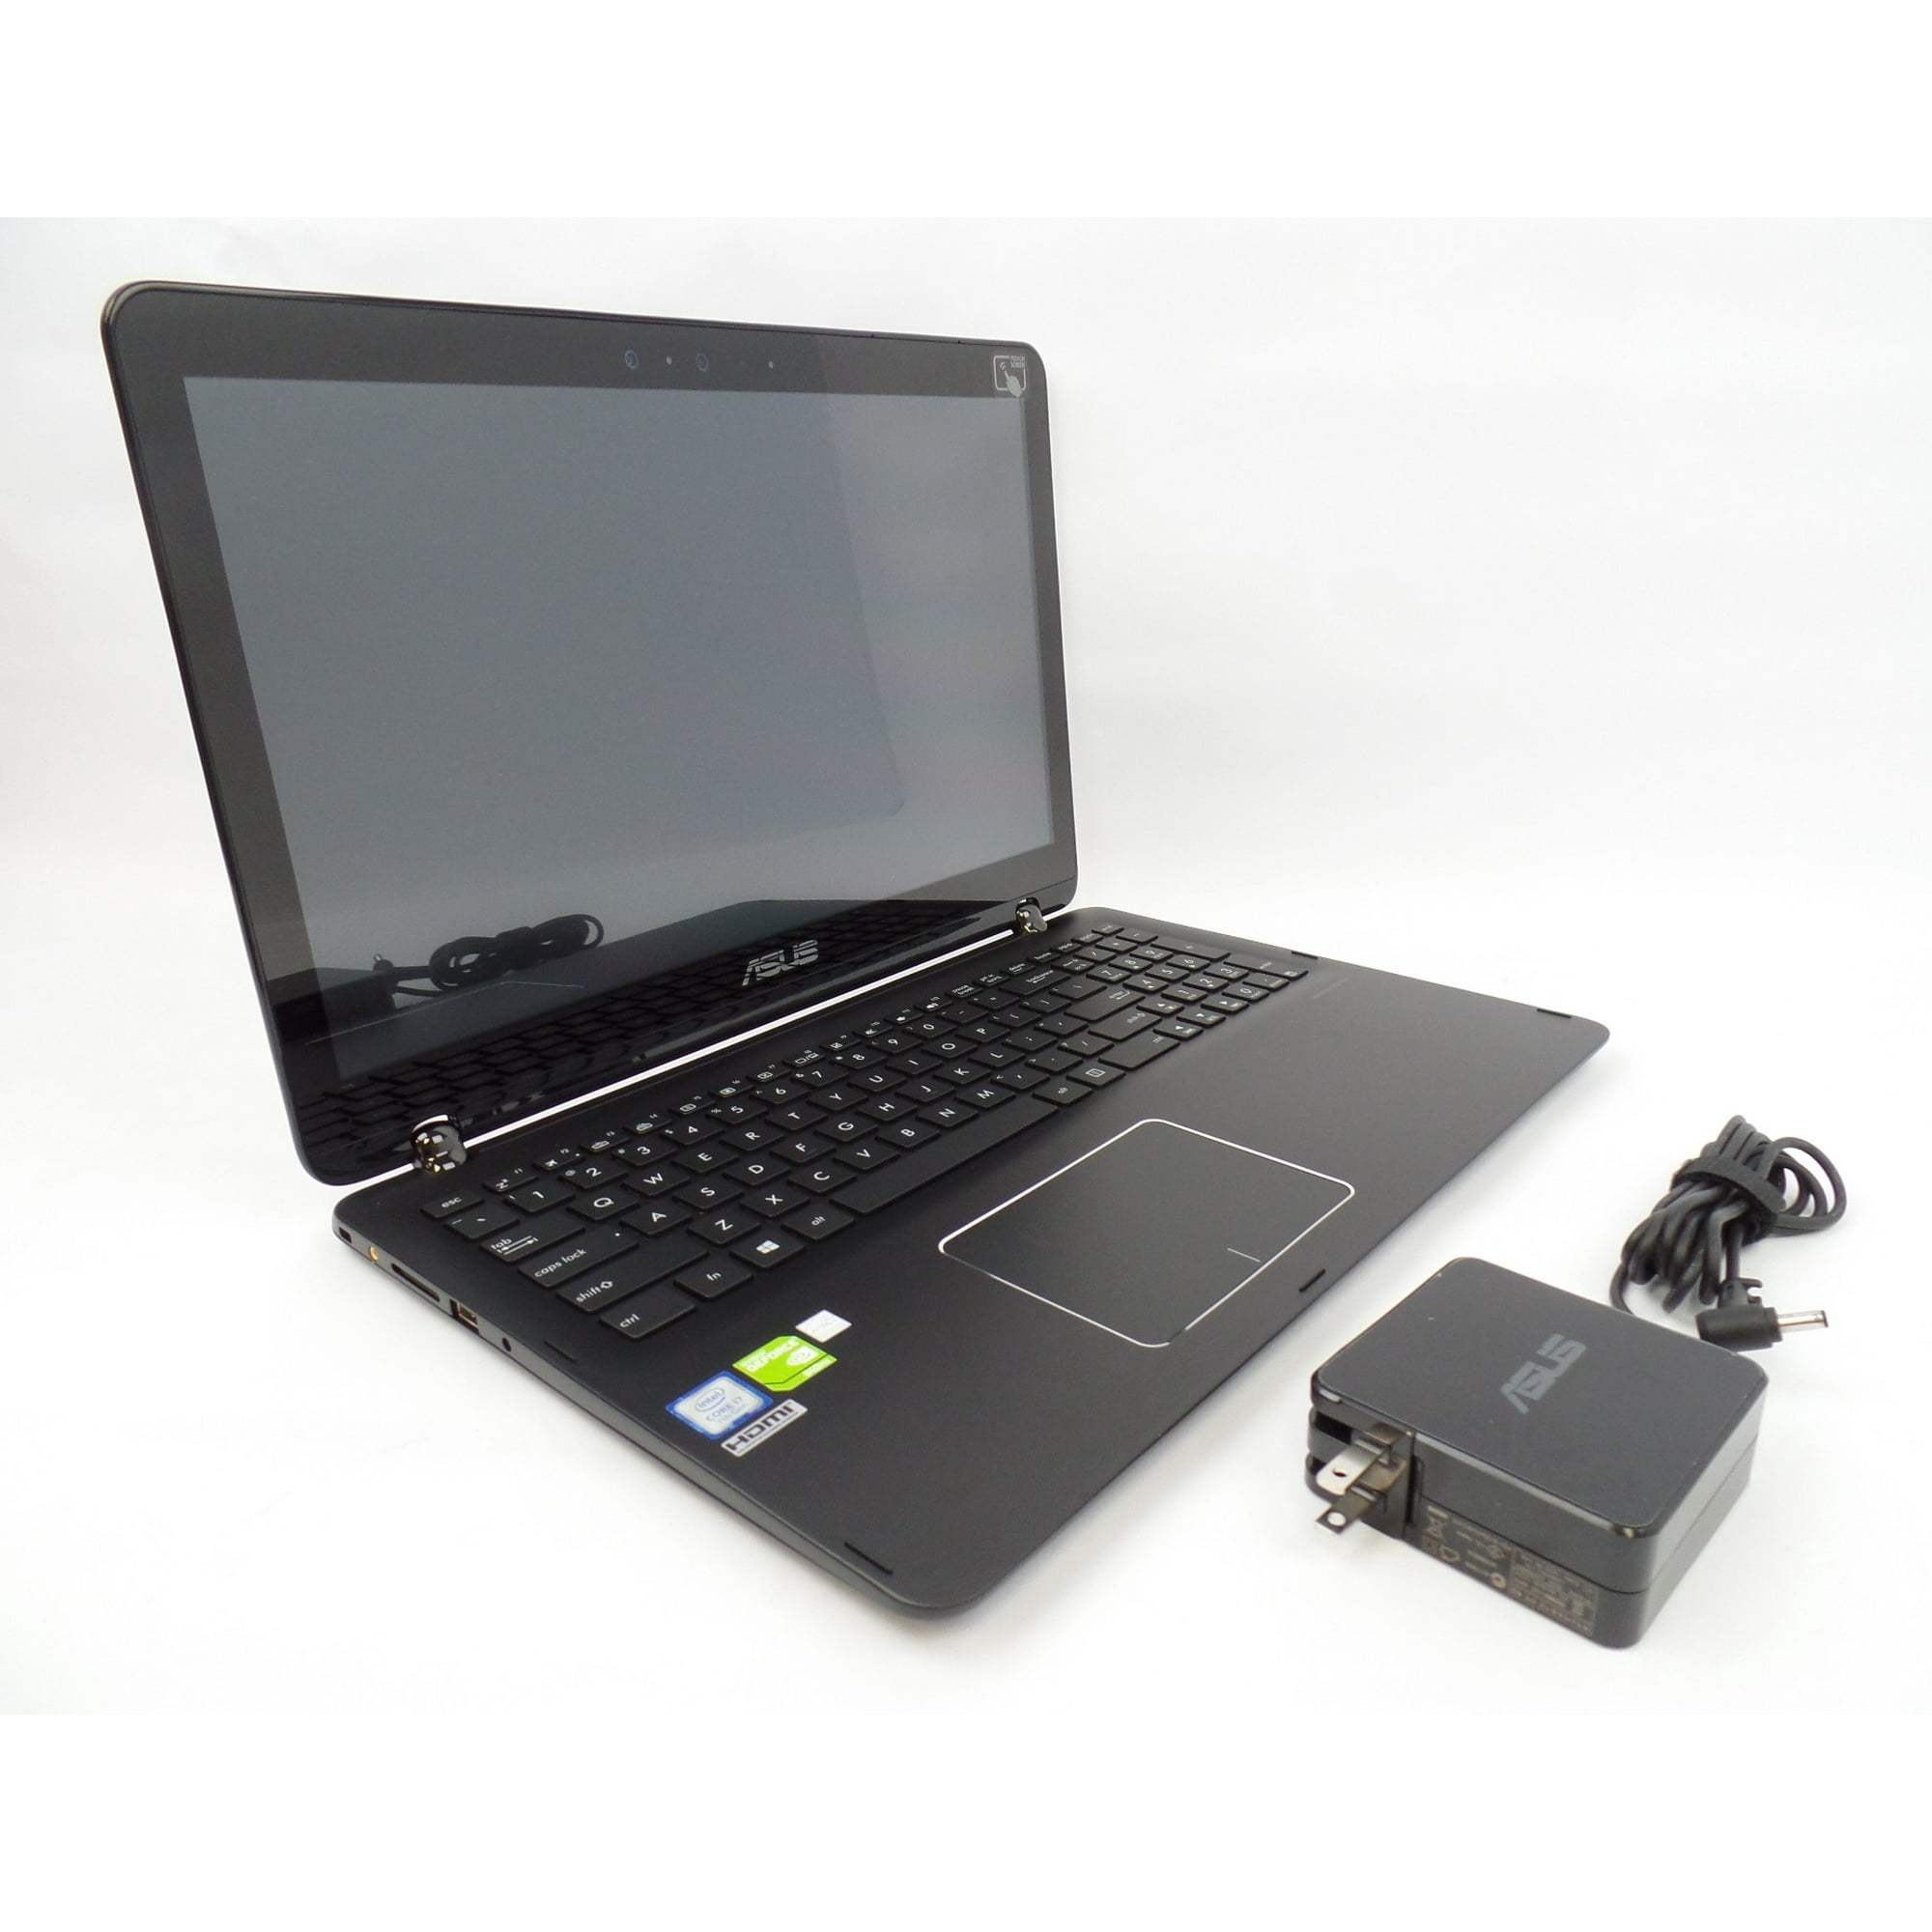 Used (good working condition) ASUS Q524U FHD Touch i7-7500U  12GB 2TB GTX940MX W10H 2in1 Laptop U